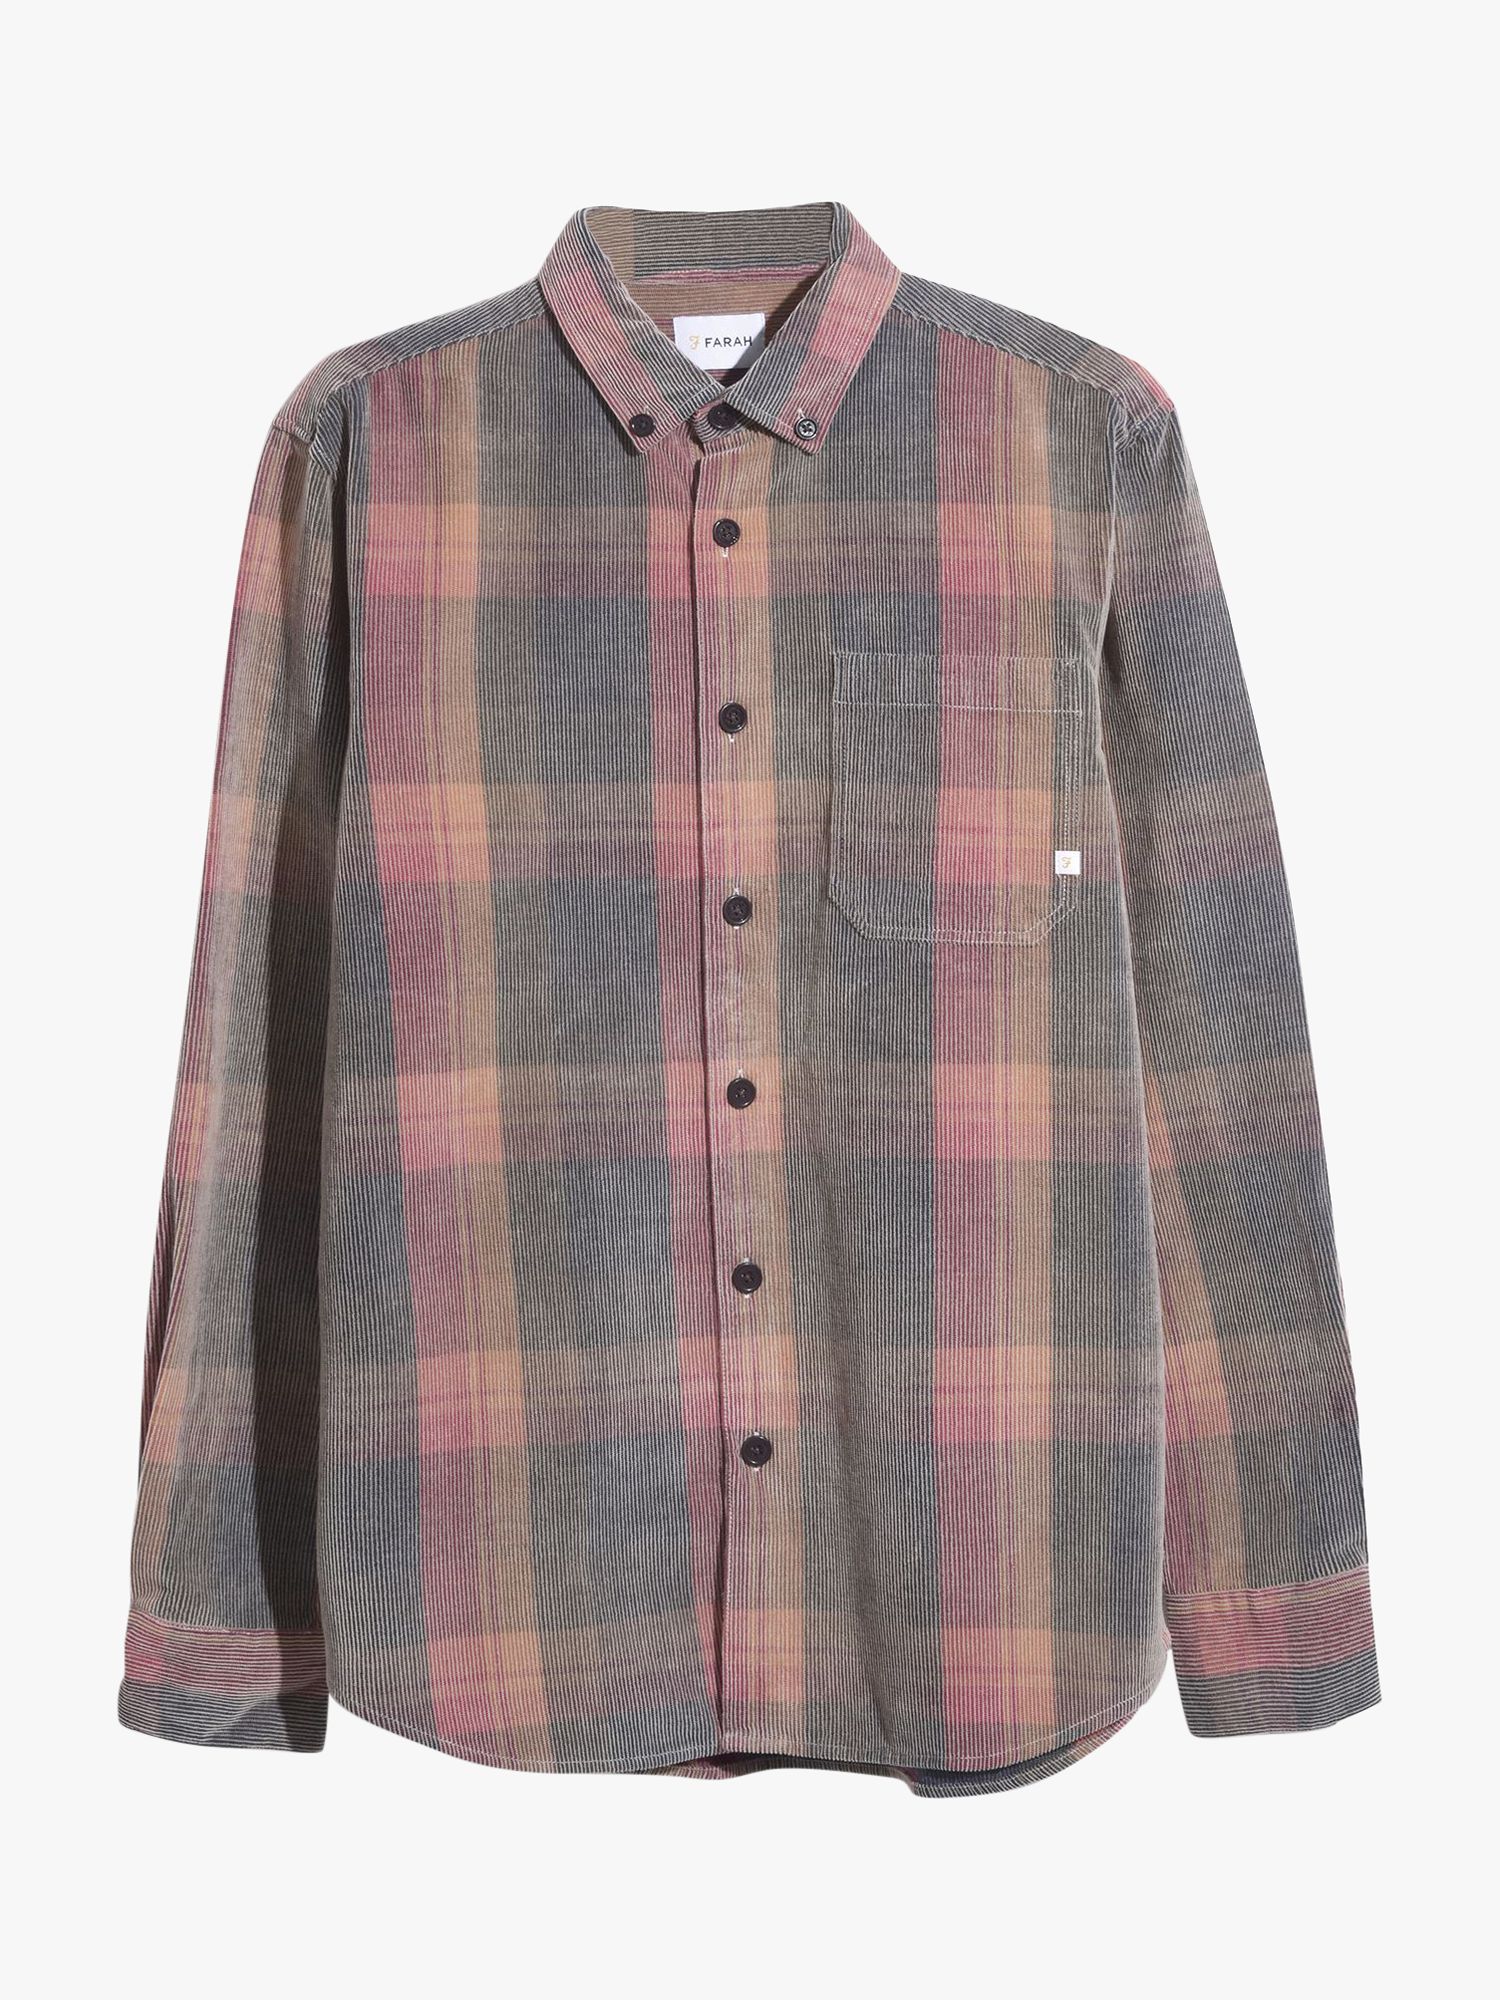 Buy Farah Hufford Check Long Sleeve Shirt, Multi Online at johnlewis.com